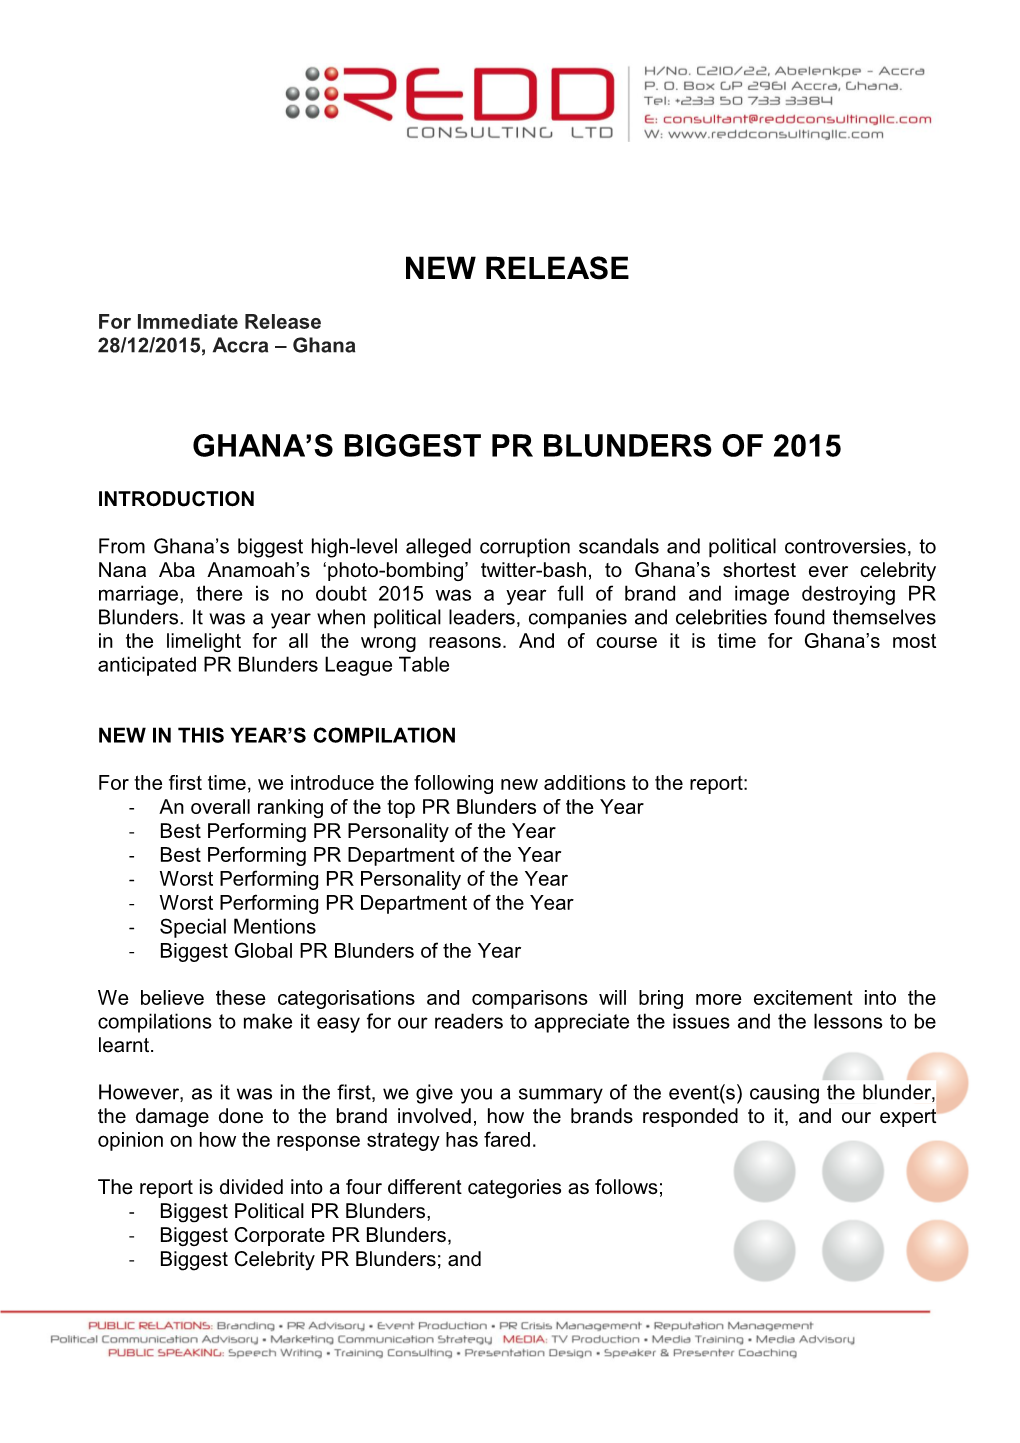 New Release Ghana's Biggest Pr Blunders of 2015